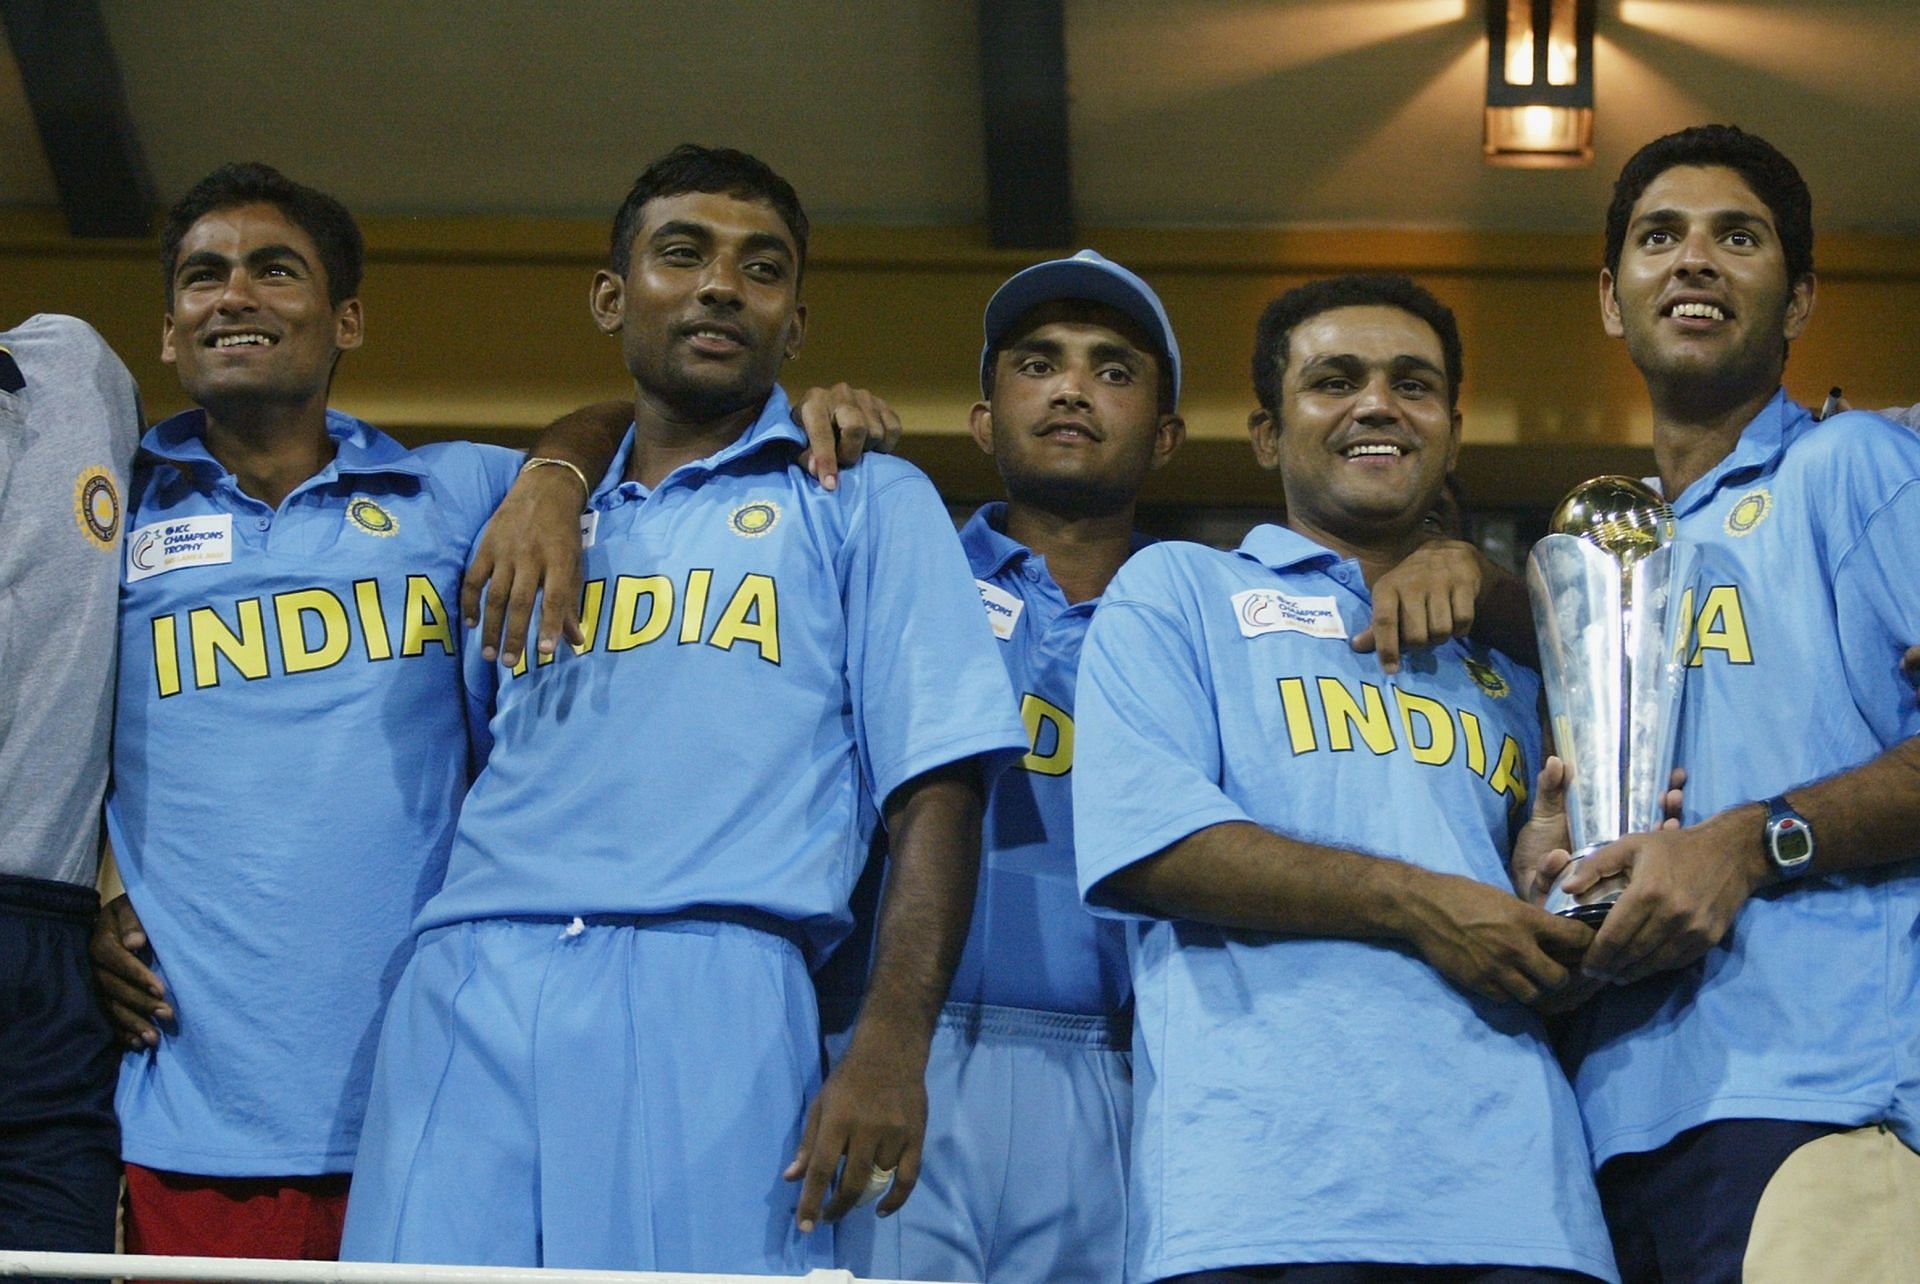 (L-R) Mohammad Kaif, Jai Prakash Yadav, Sourav Ganguly, Virender Sehwag, and Yuvraj Singh with the trophy [Getty Images]